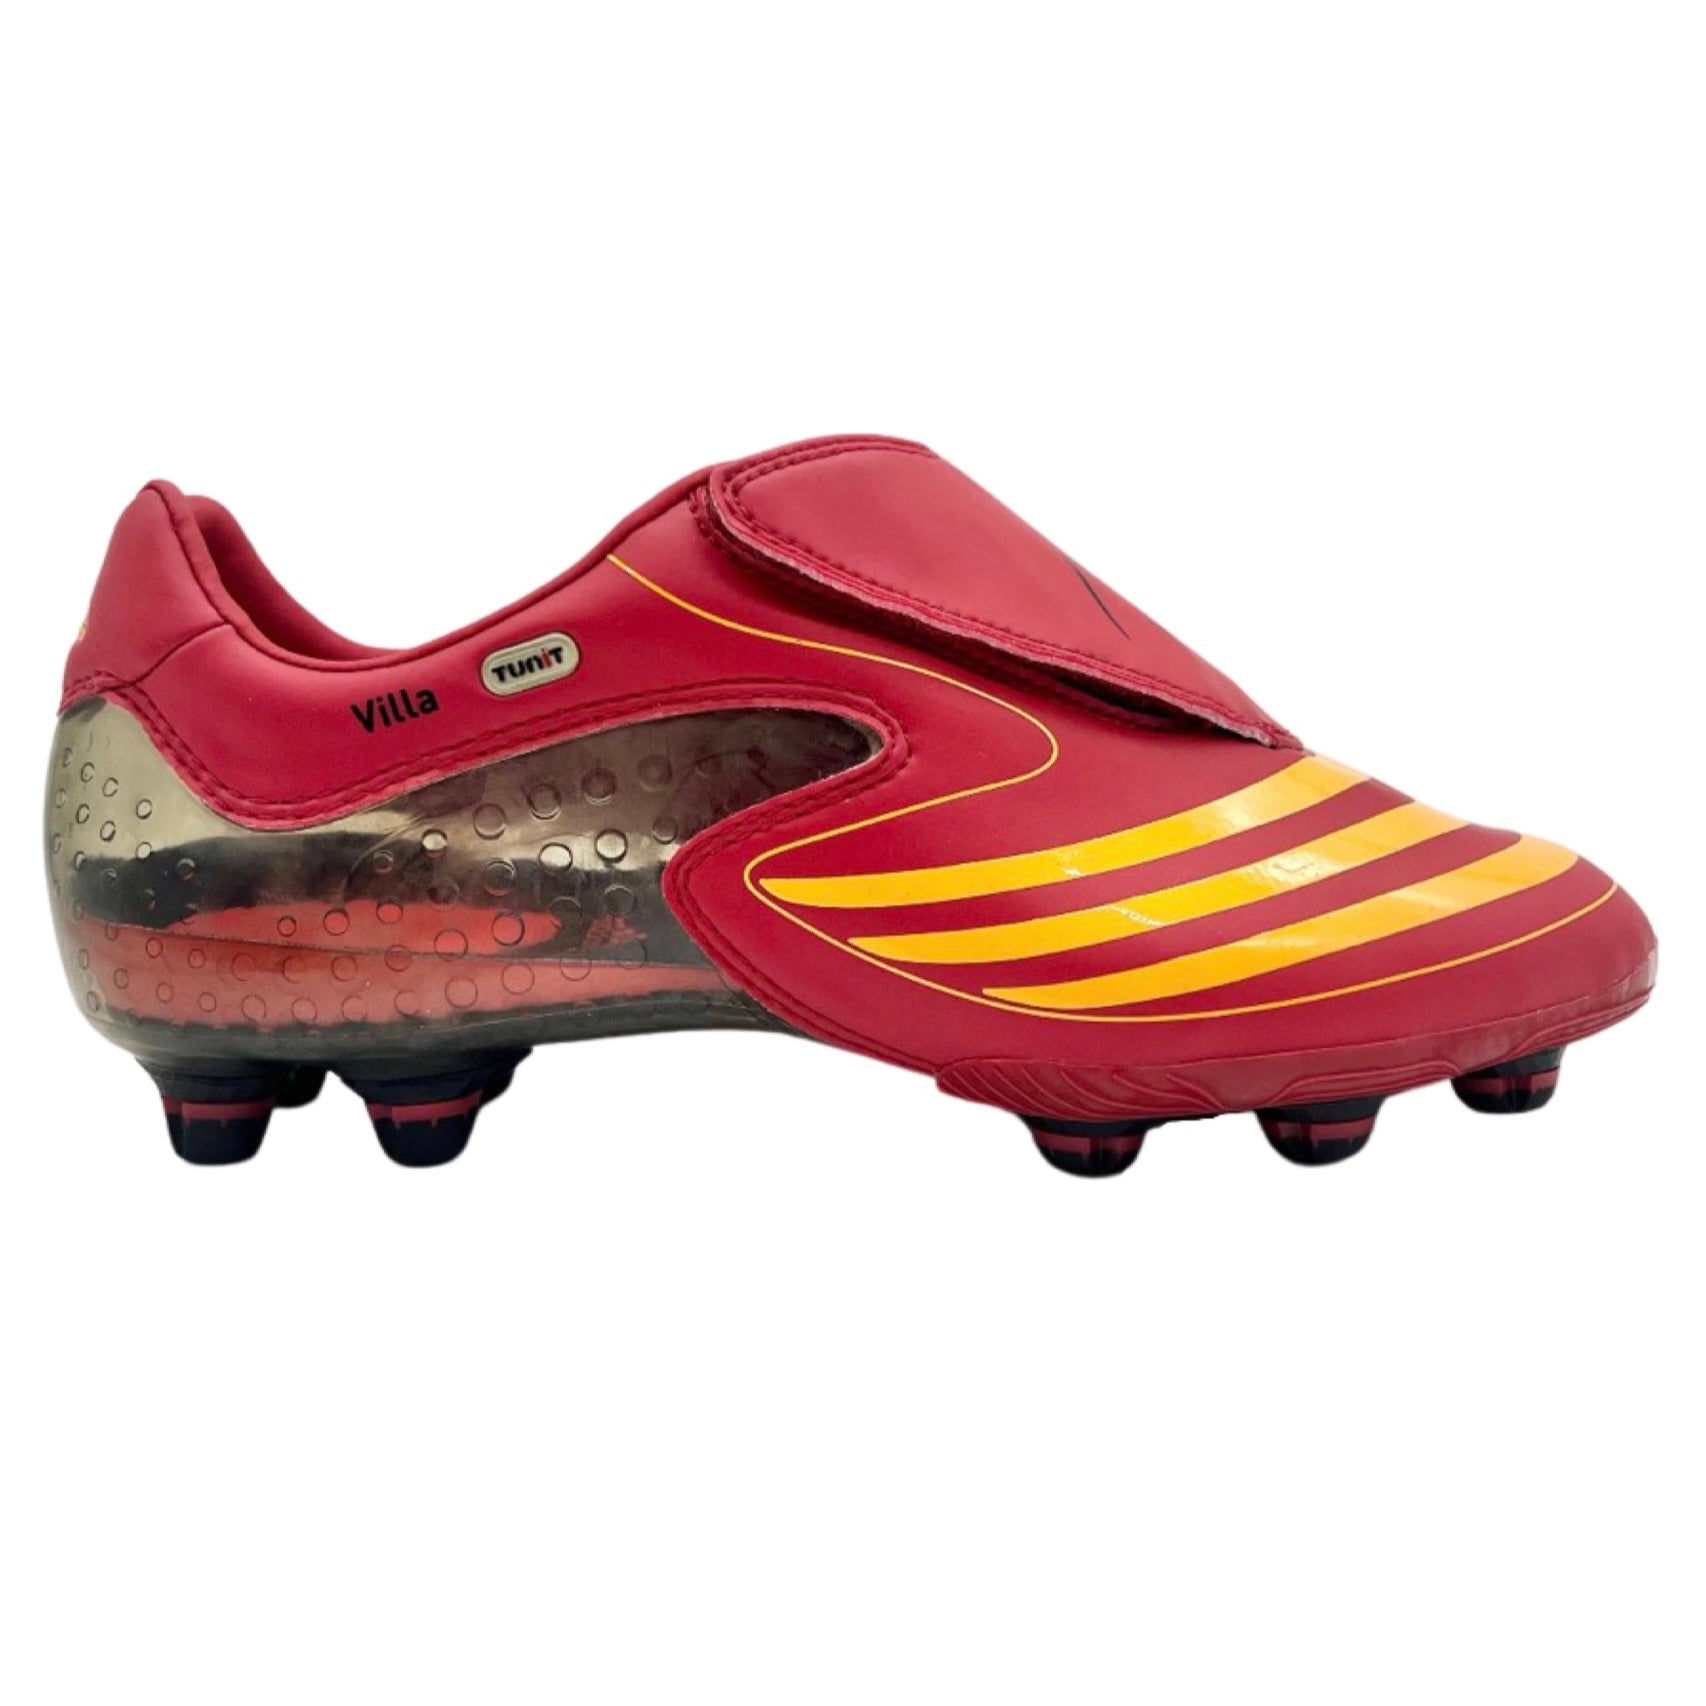 La base de datos Innecesario mezcla David Villa Match Issued Adidas F50.8 Tunit UEFA Euro 2008 – BC Boots UK